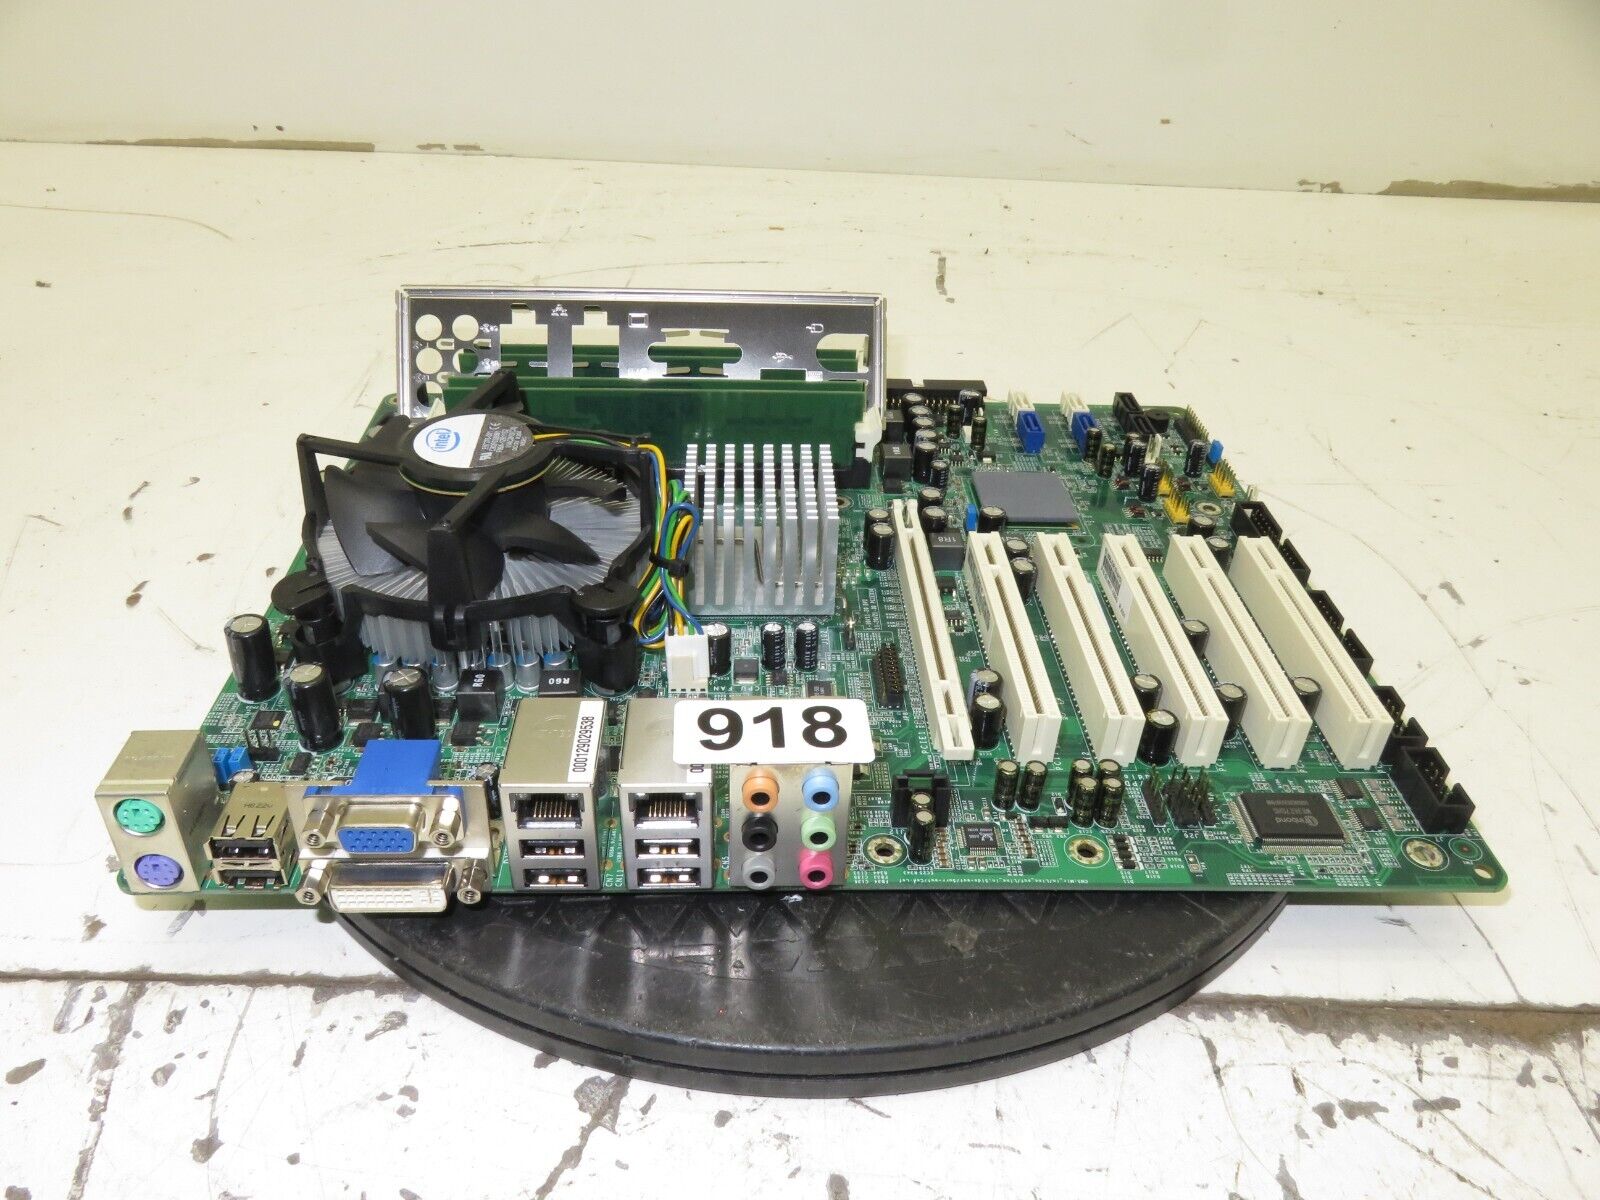 DFI BL600-DR Industrial Motherboard Intel Core 2 Quad Q8300 2.5GHz 4GB Ram